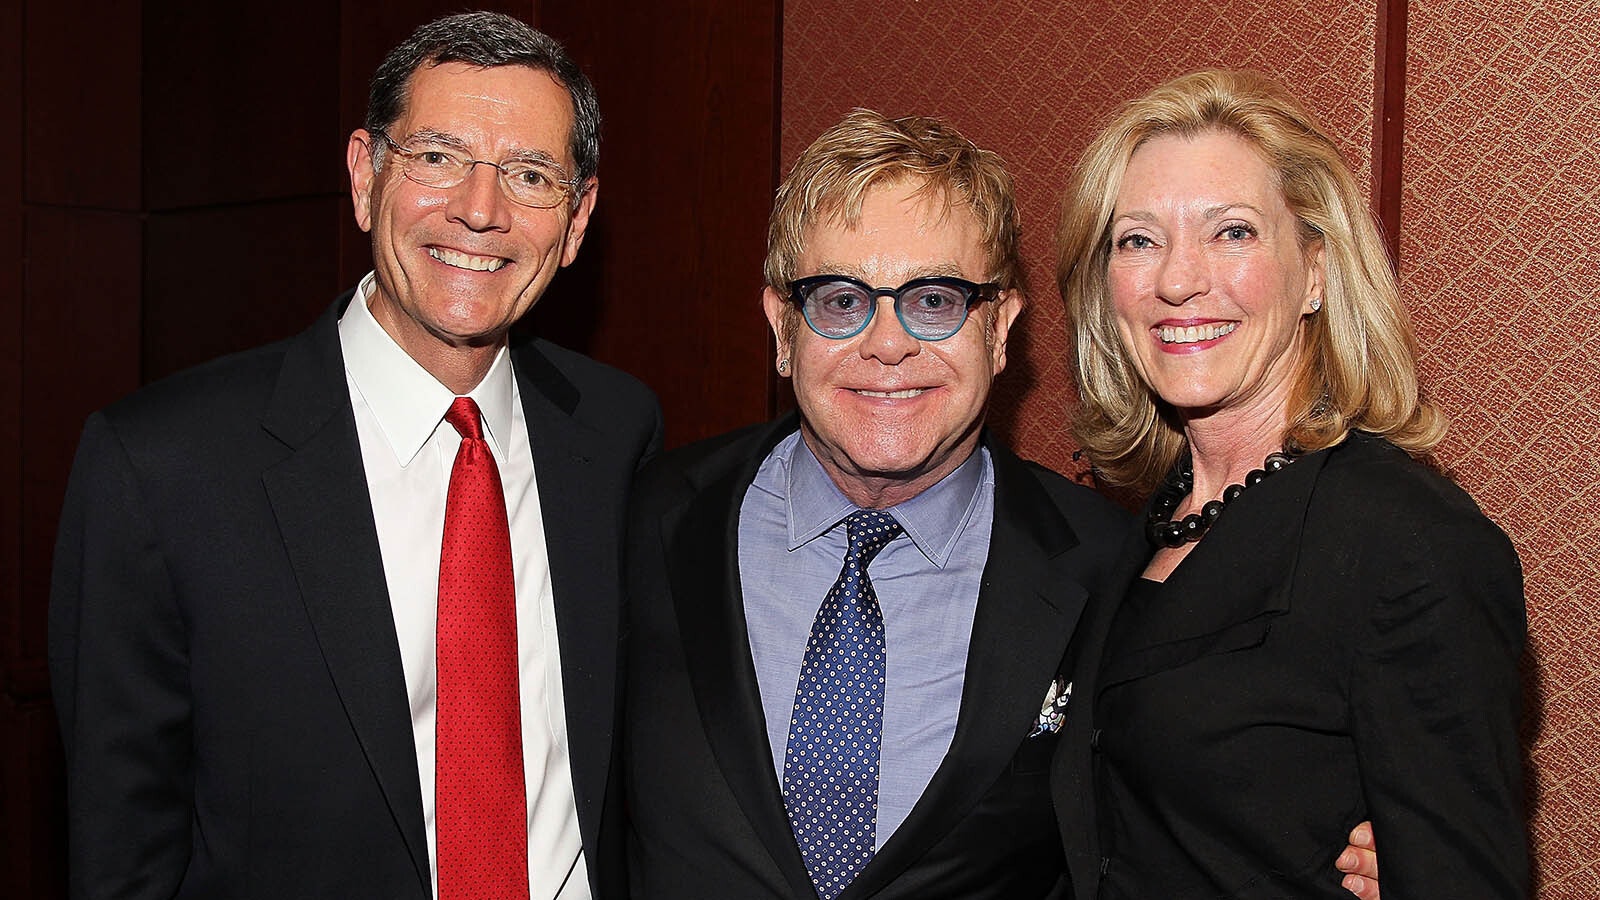 Bobbi Barrasso with her husband, U.S. Sen. John Barrasso, and Elton John before an event for John's AIDS foundation.